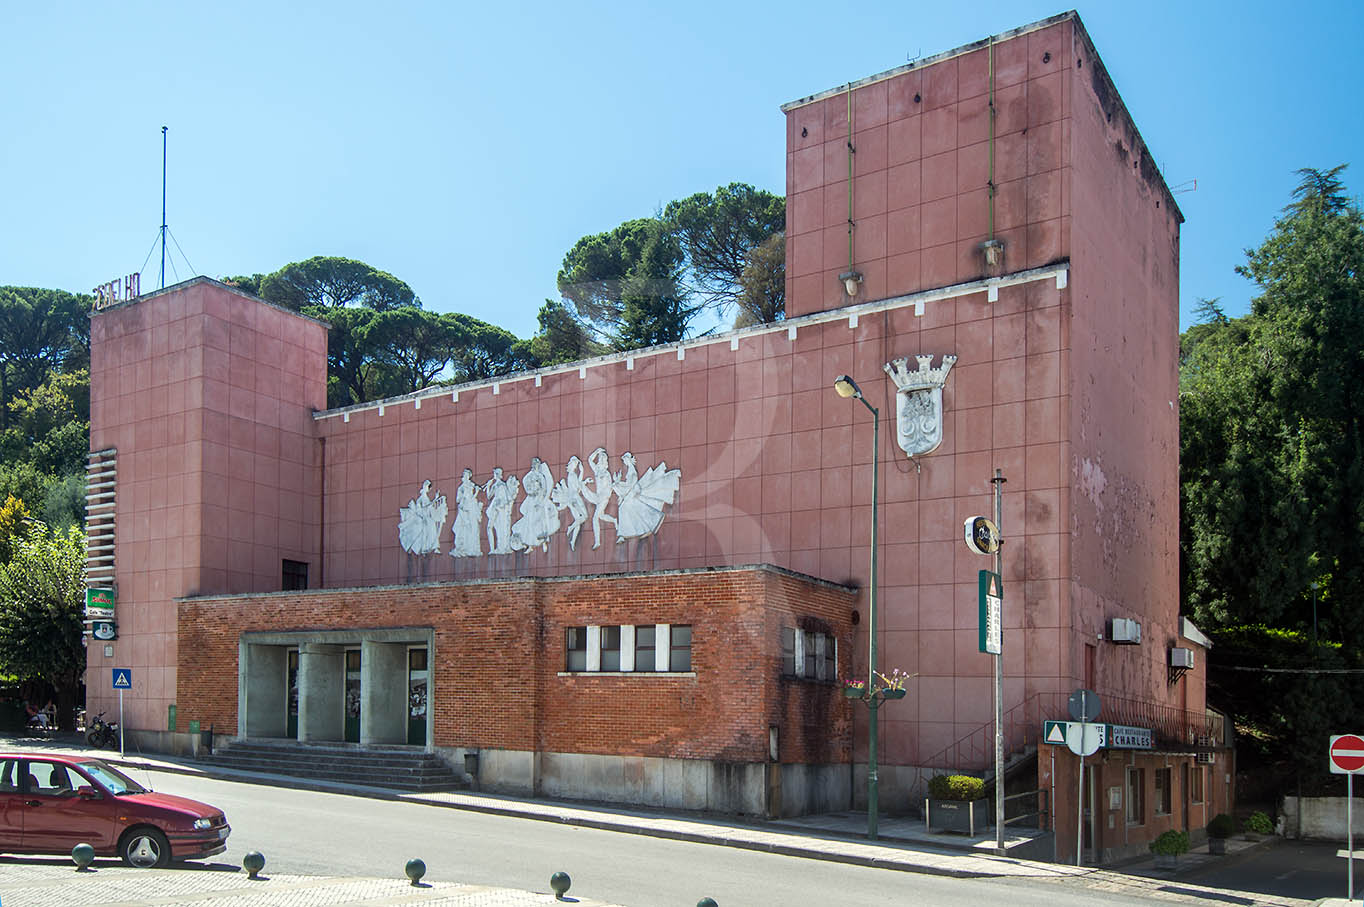 Teatro Alves Coelho (Arq. Mrio Oliveira - 1950)